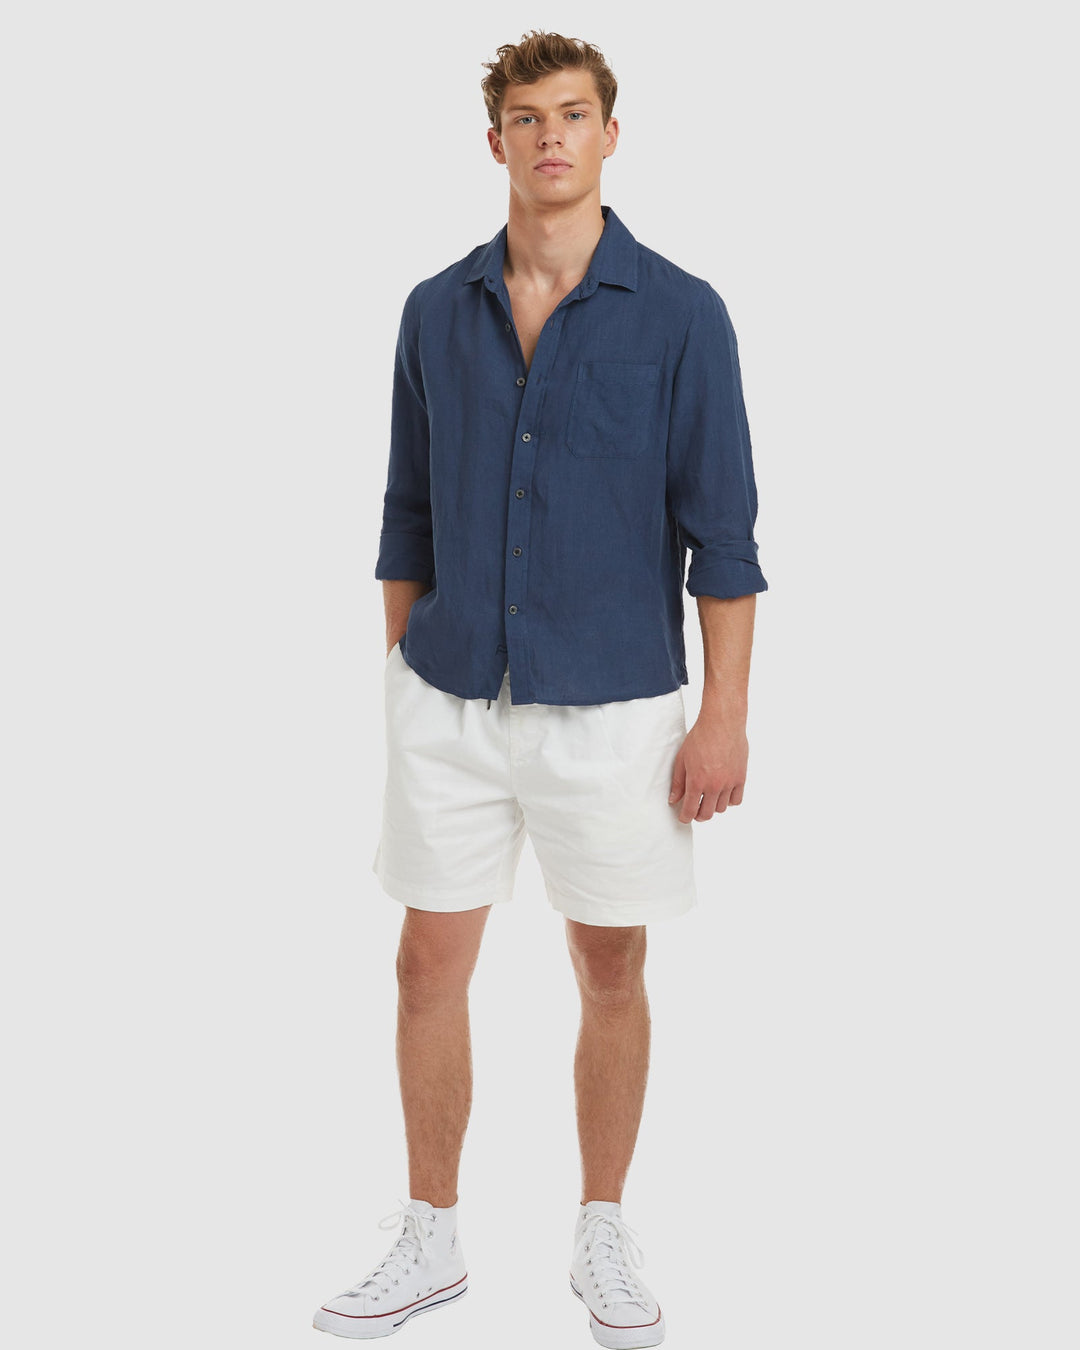 Ravello-LS No Tuck Navy Linen Shirt - Slim Fit